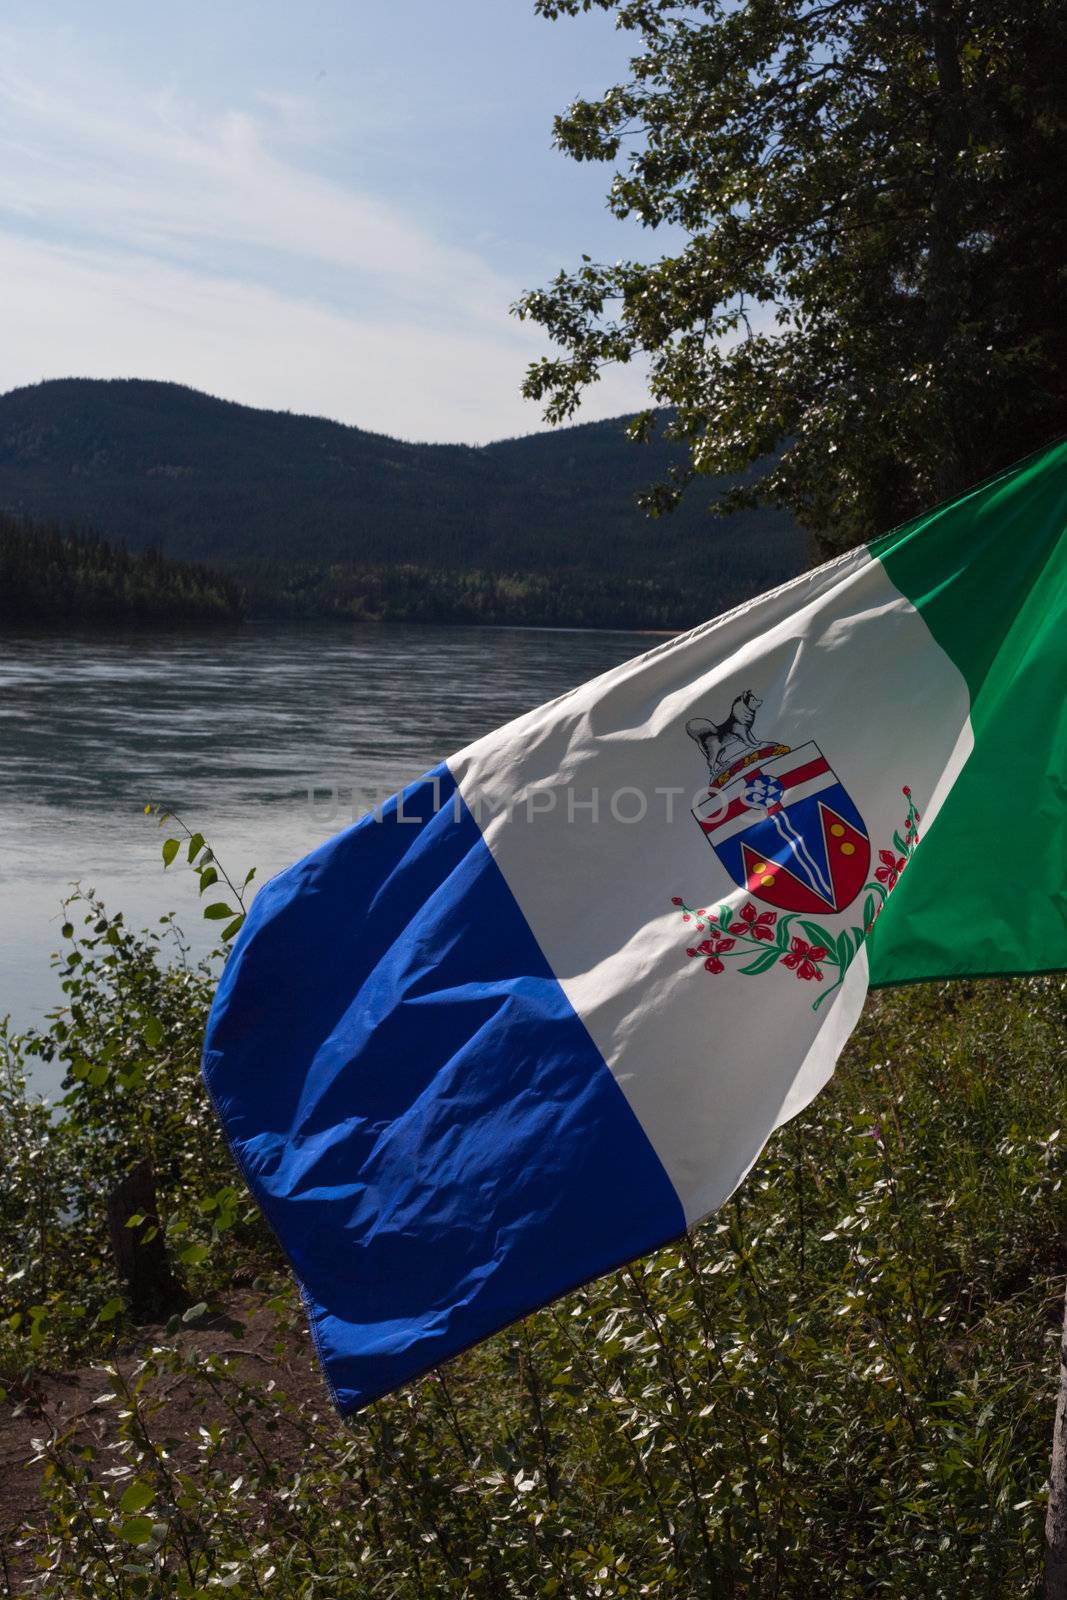 Yukon flag in front of Yukon River by PiLens